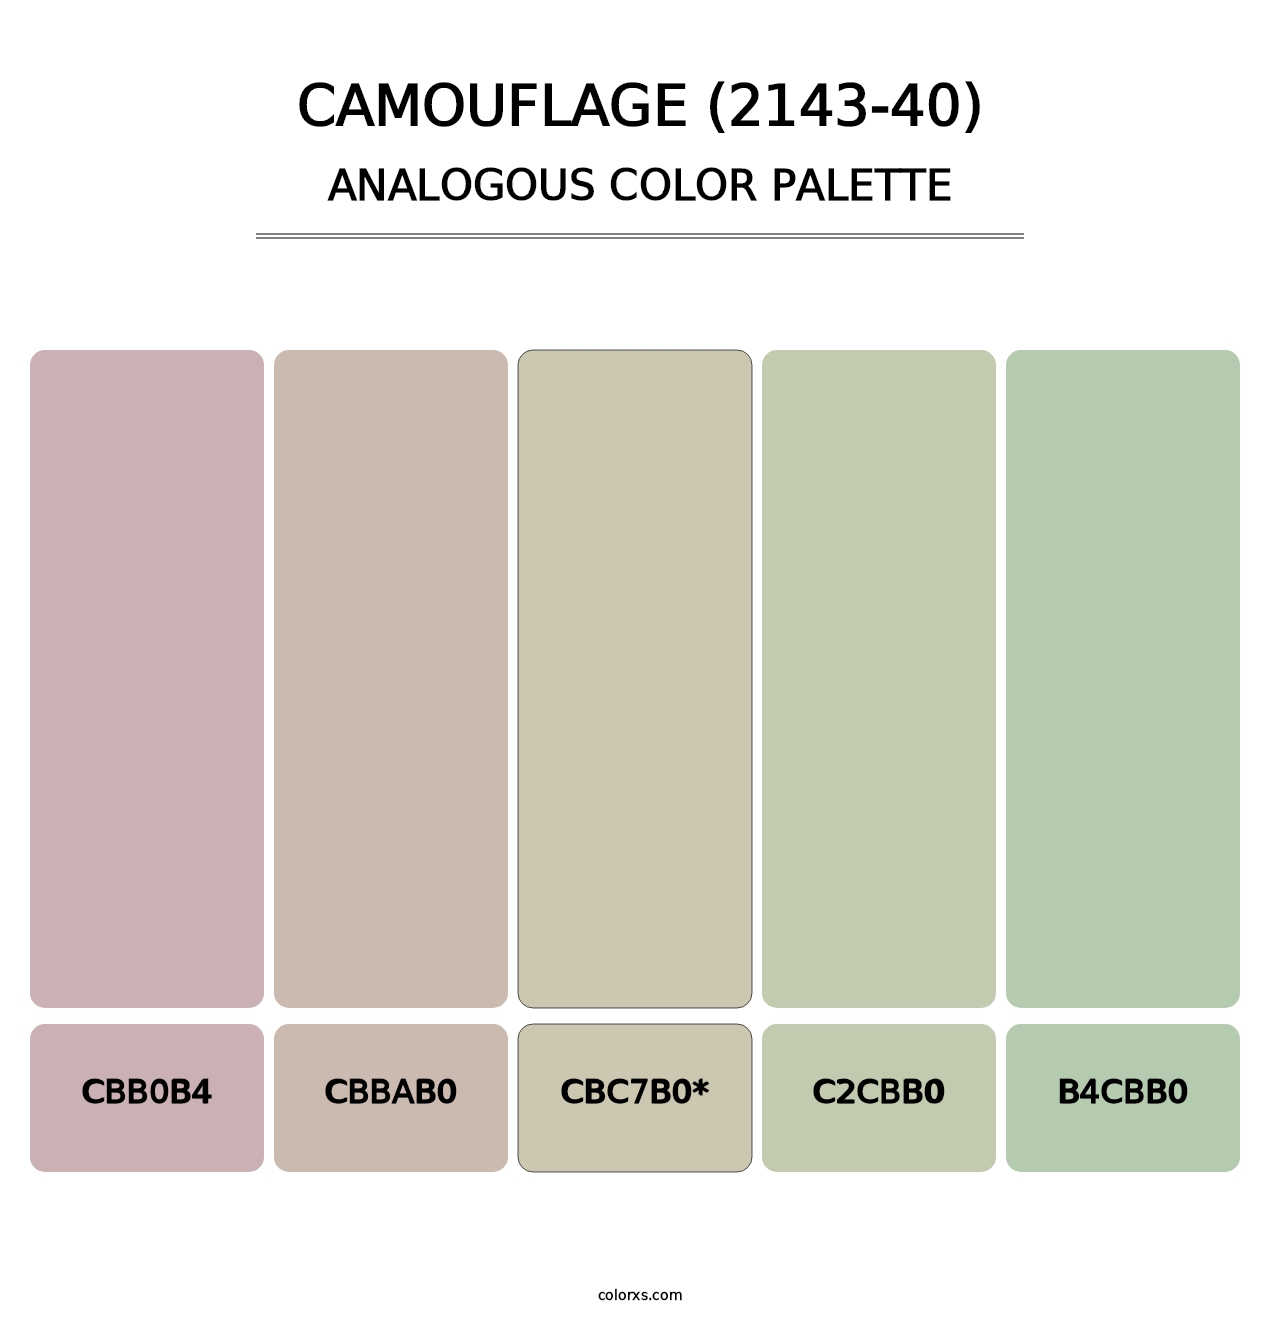 Camouflage (2143-40) - Analogous Color Palette